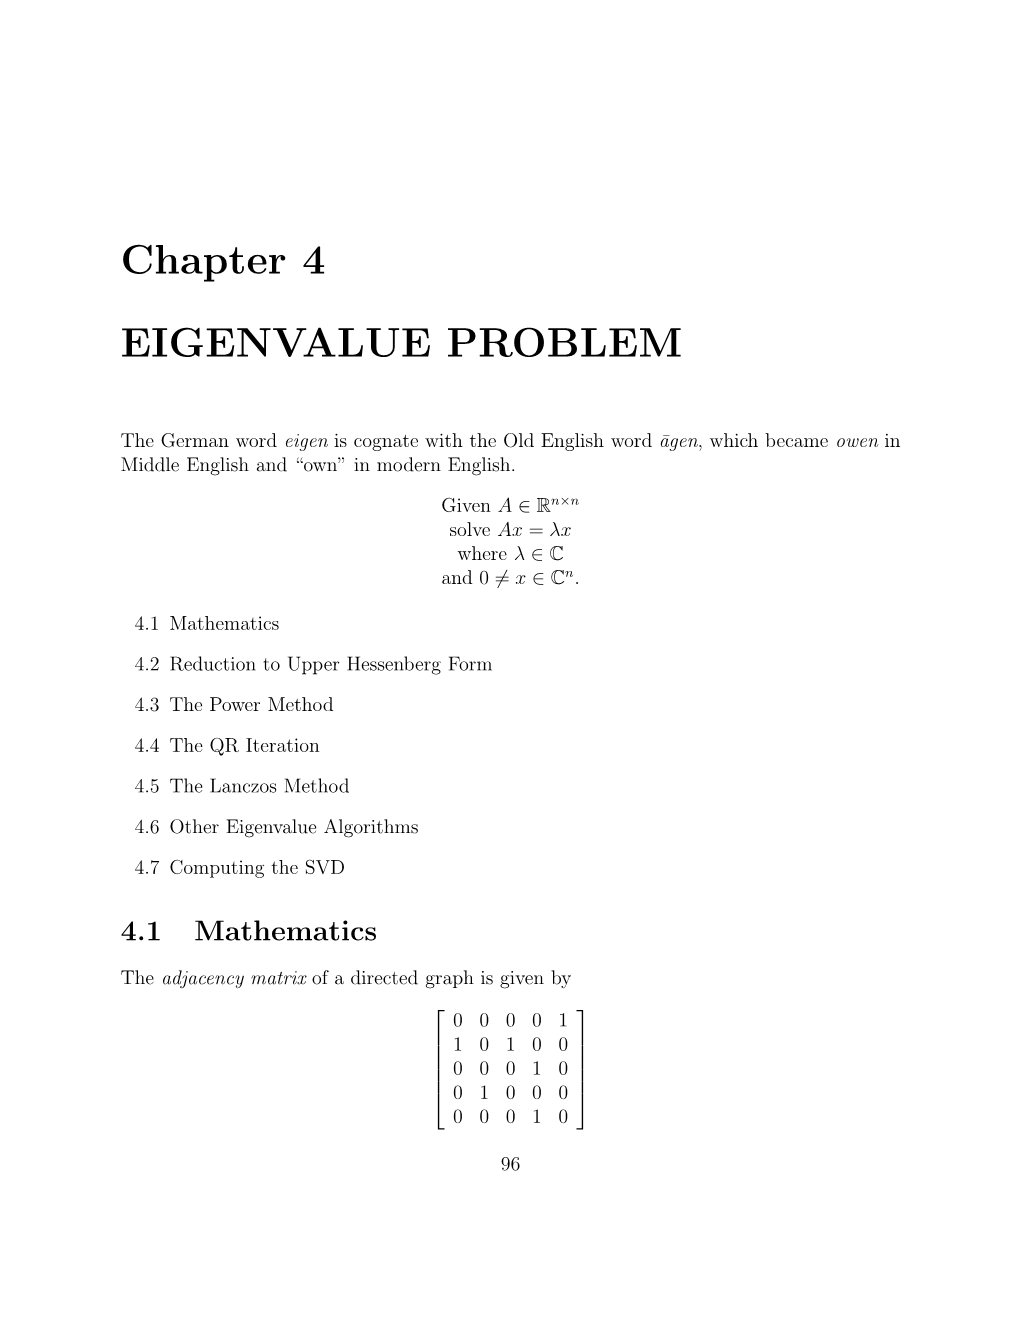 Chapter 4 EIGENVALUE PROBLEM